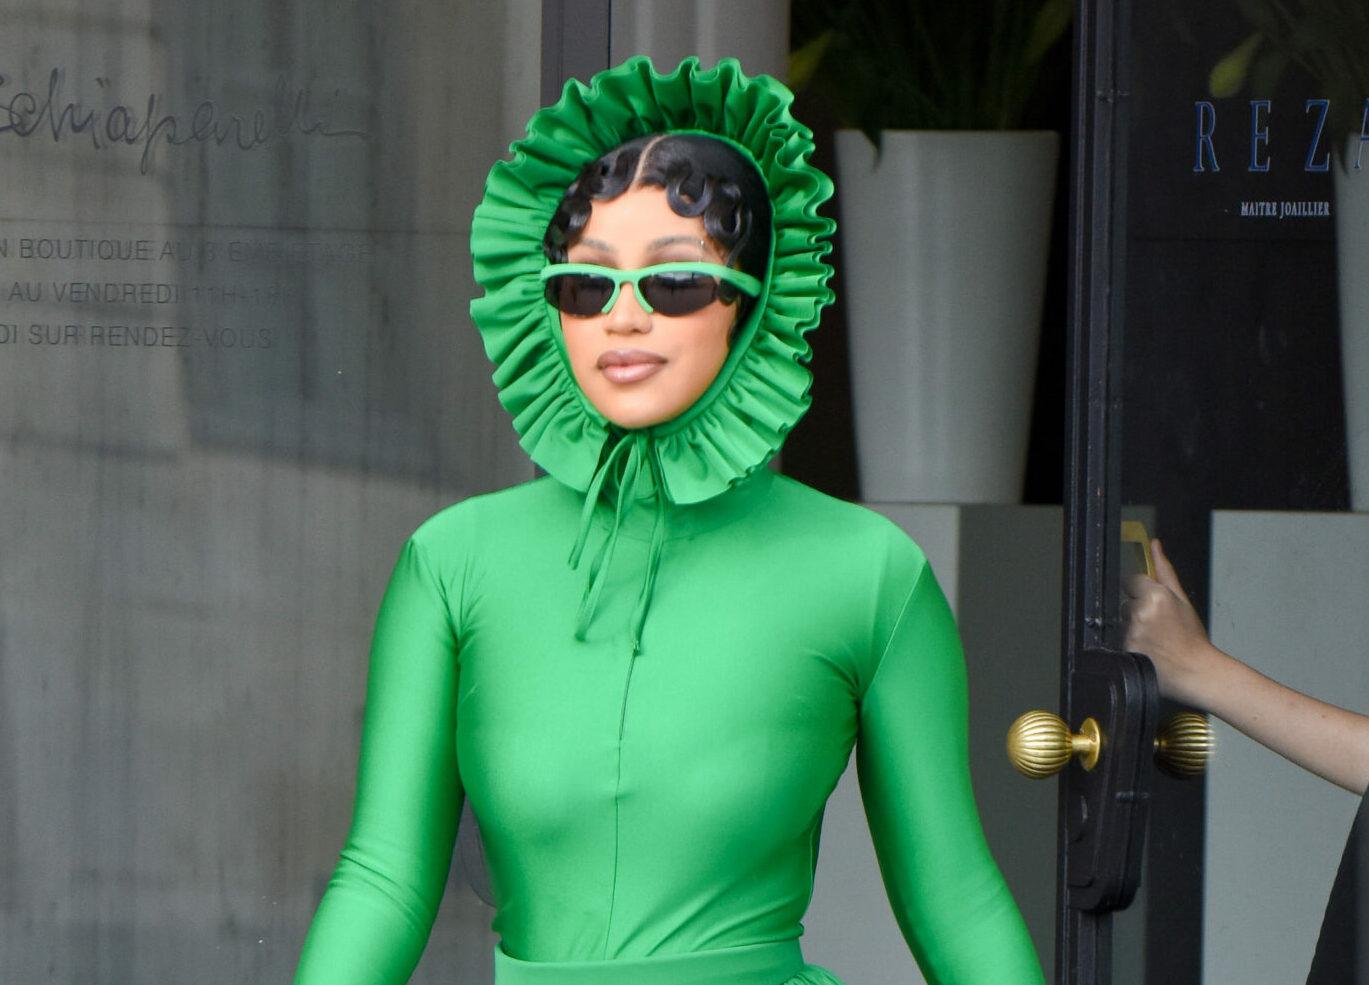 Cardi B is seen dressed as a green flower in Paris as she visits Schaperrili.